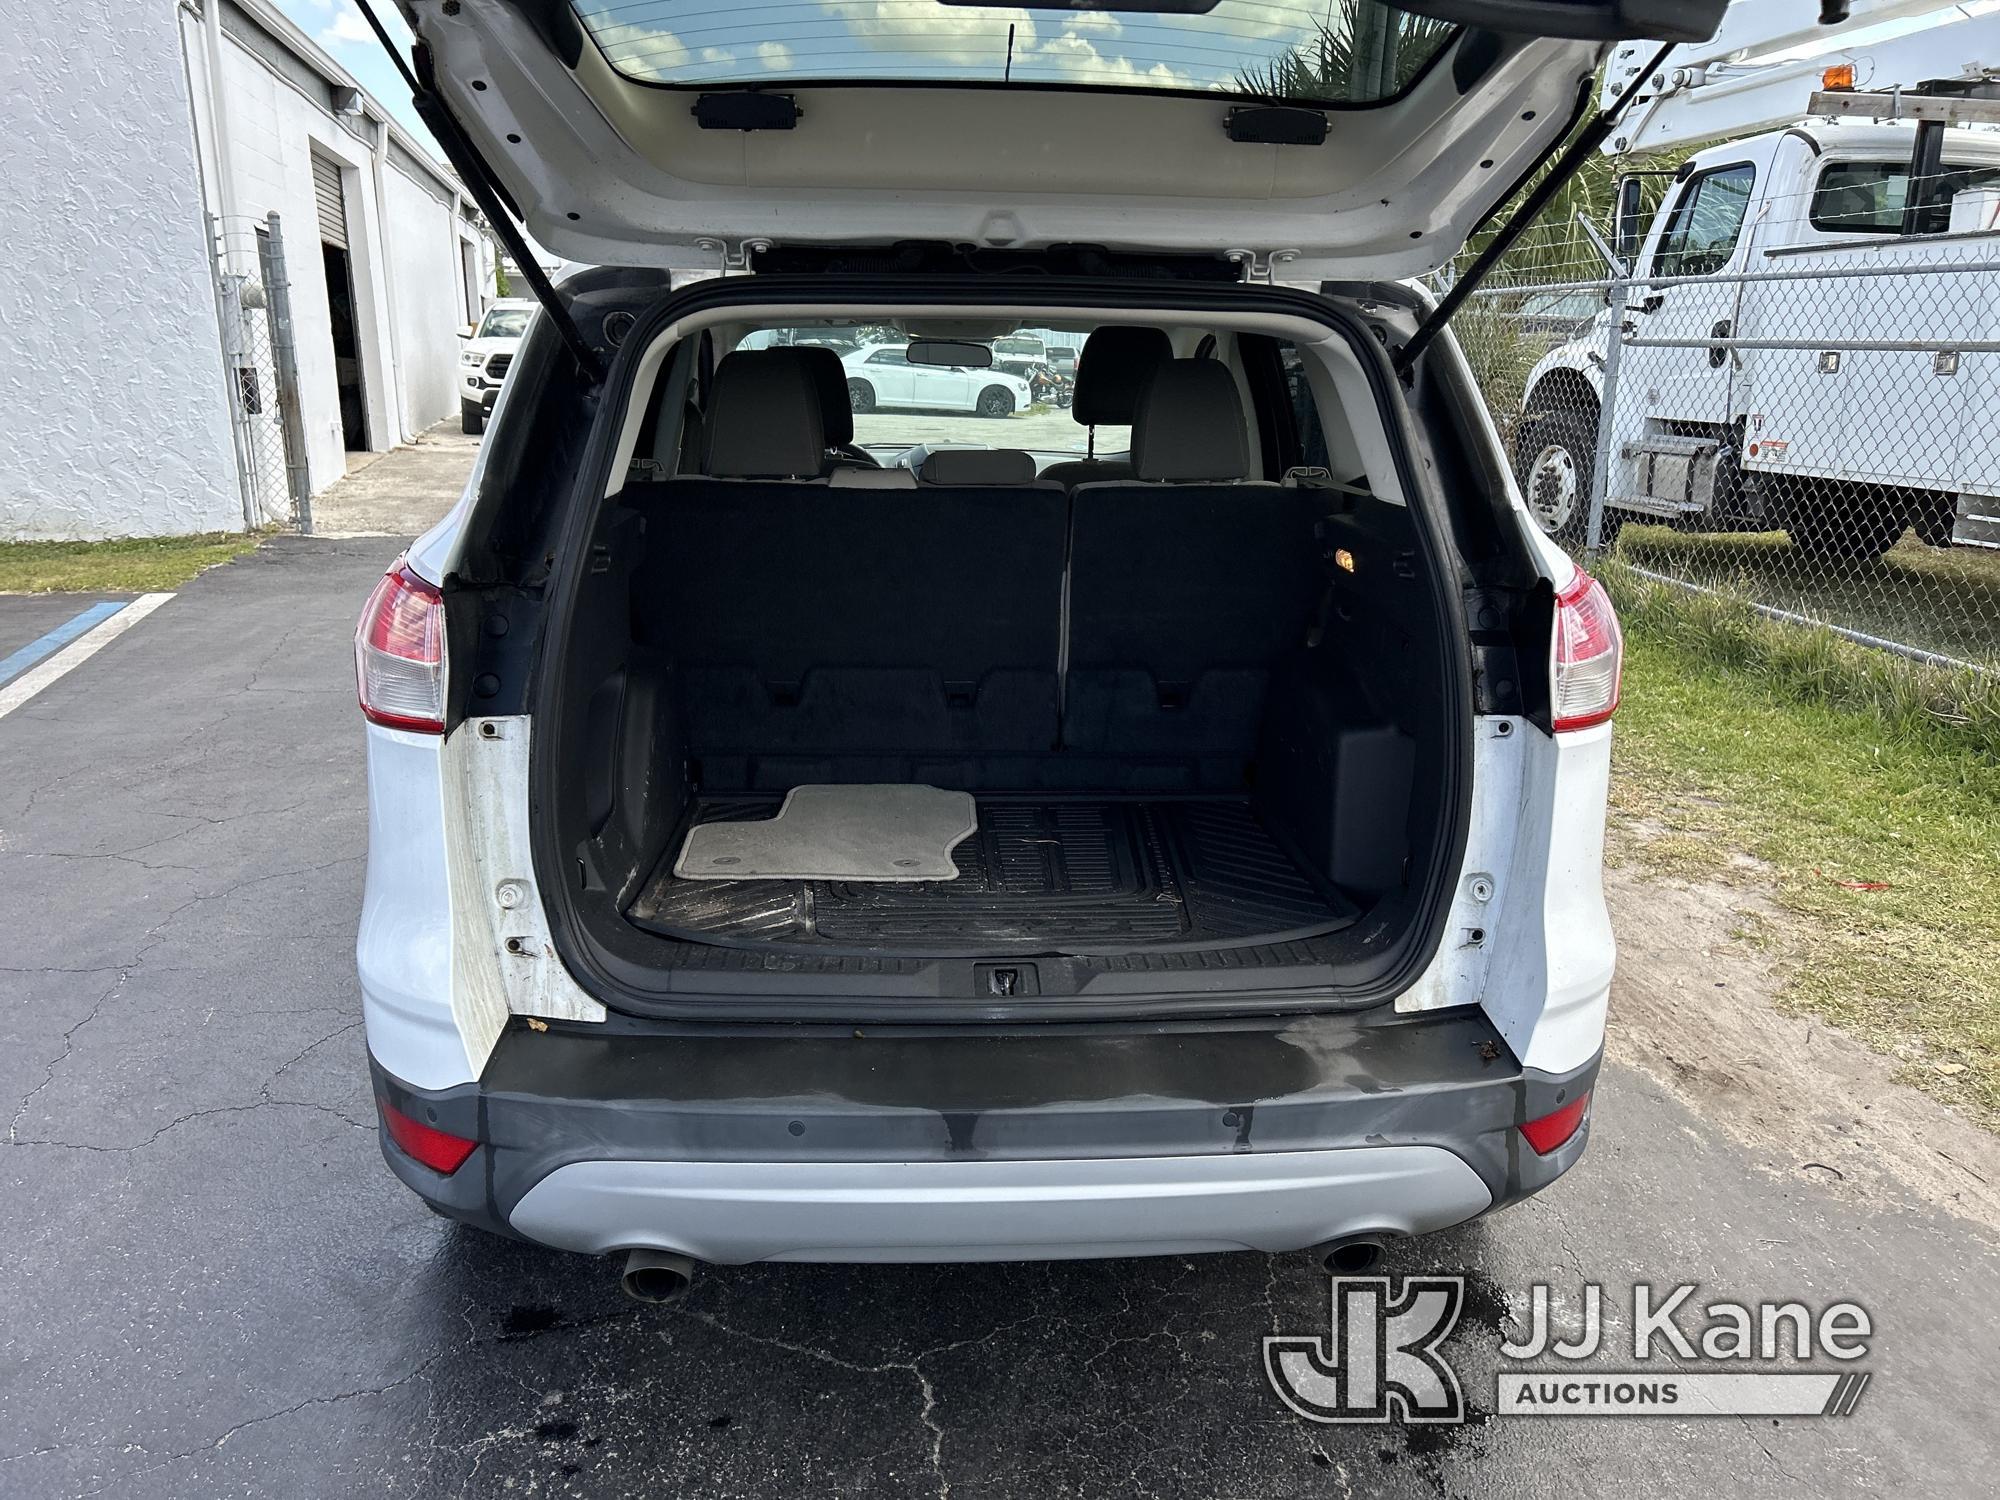 (Ocala, FL) 2015 Ford Escape 4x4 4-Door Sport Utility Vehicle Duke Unit) (Runs & Moves) (Check Engin